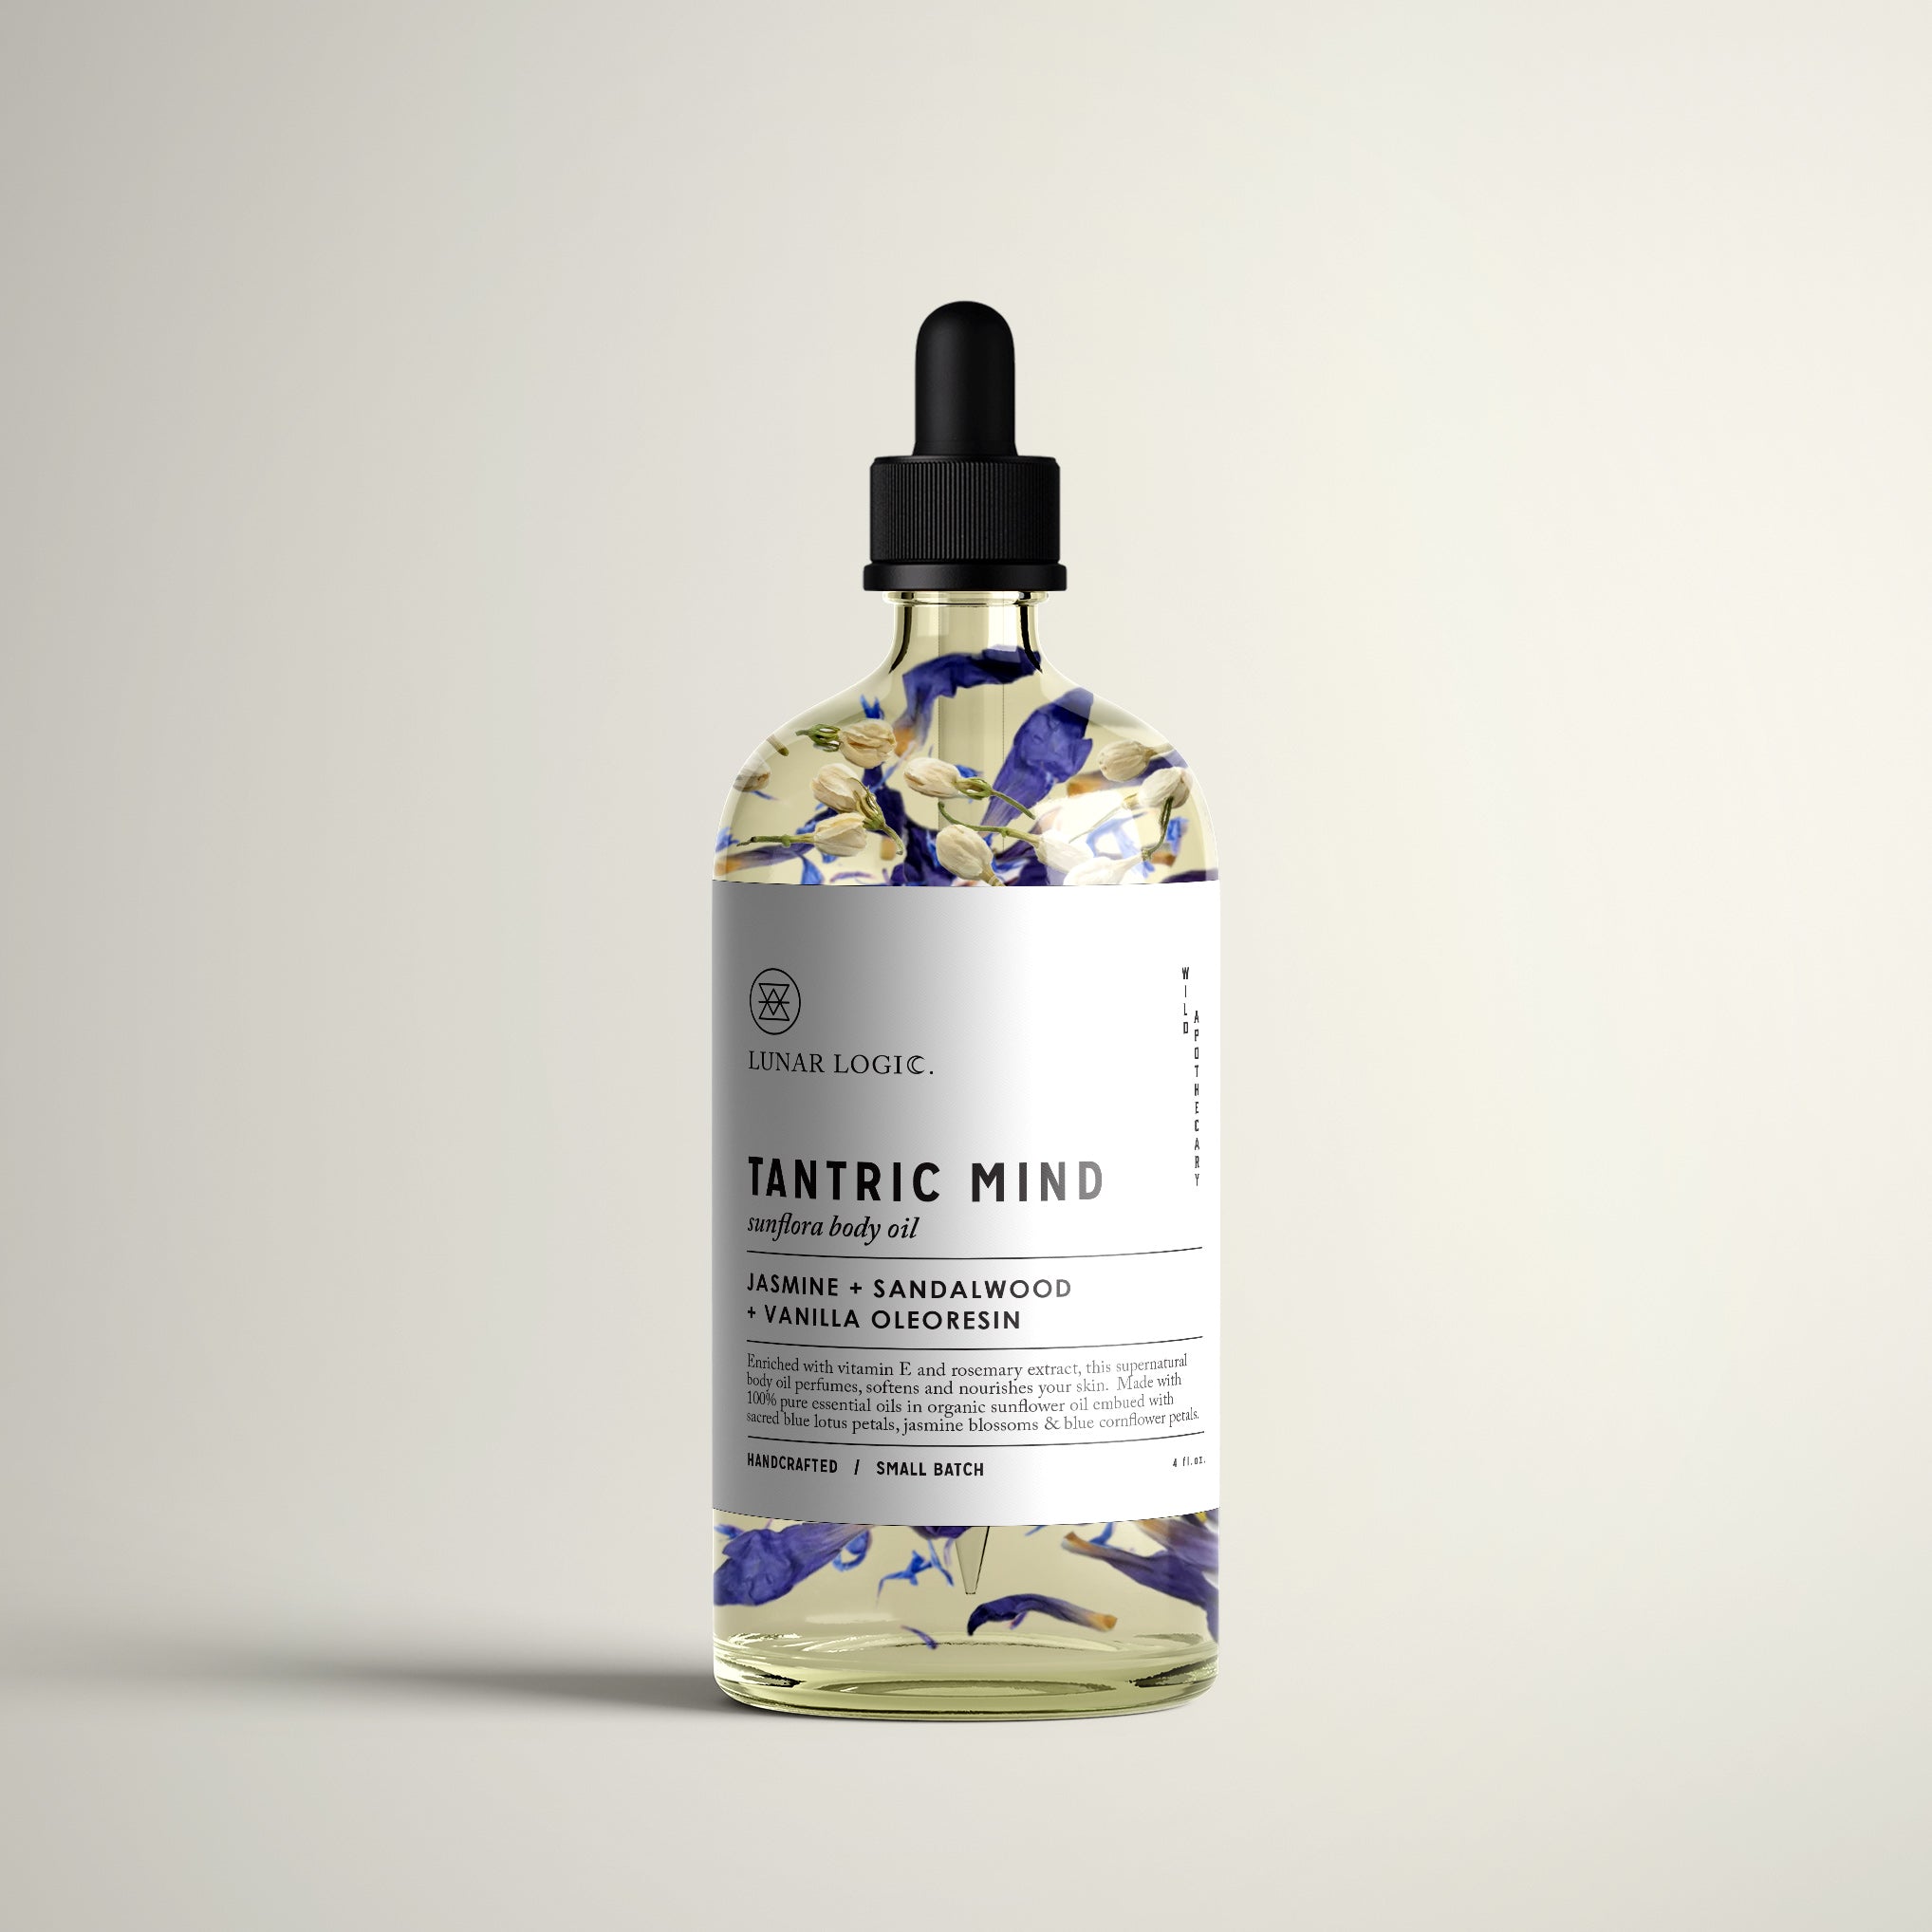 Divine Masculine Essential Oil Blend – BodyMantra